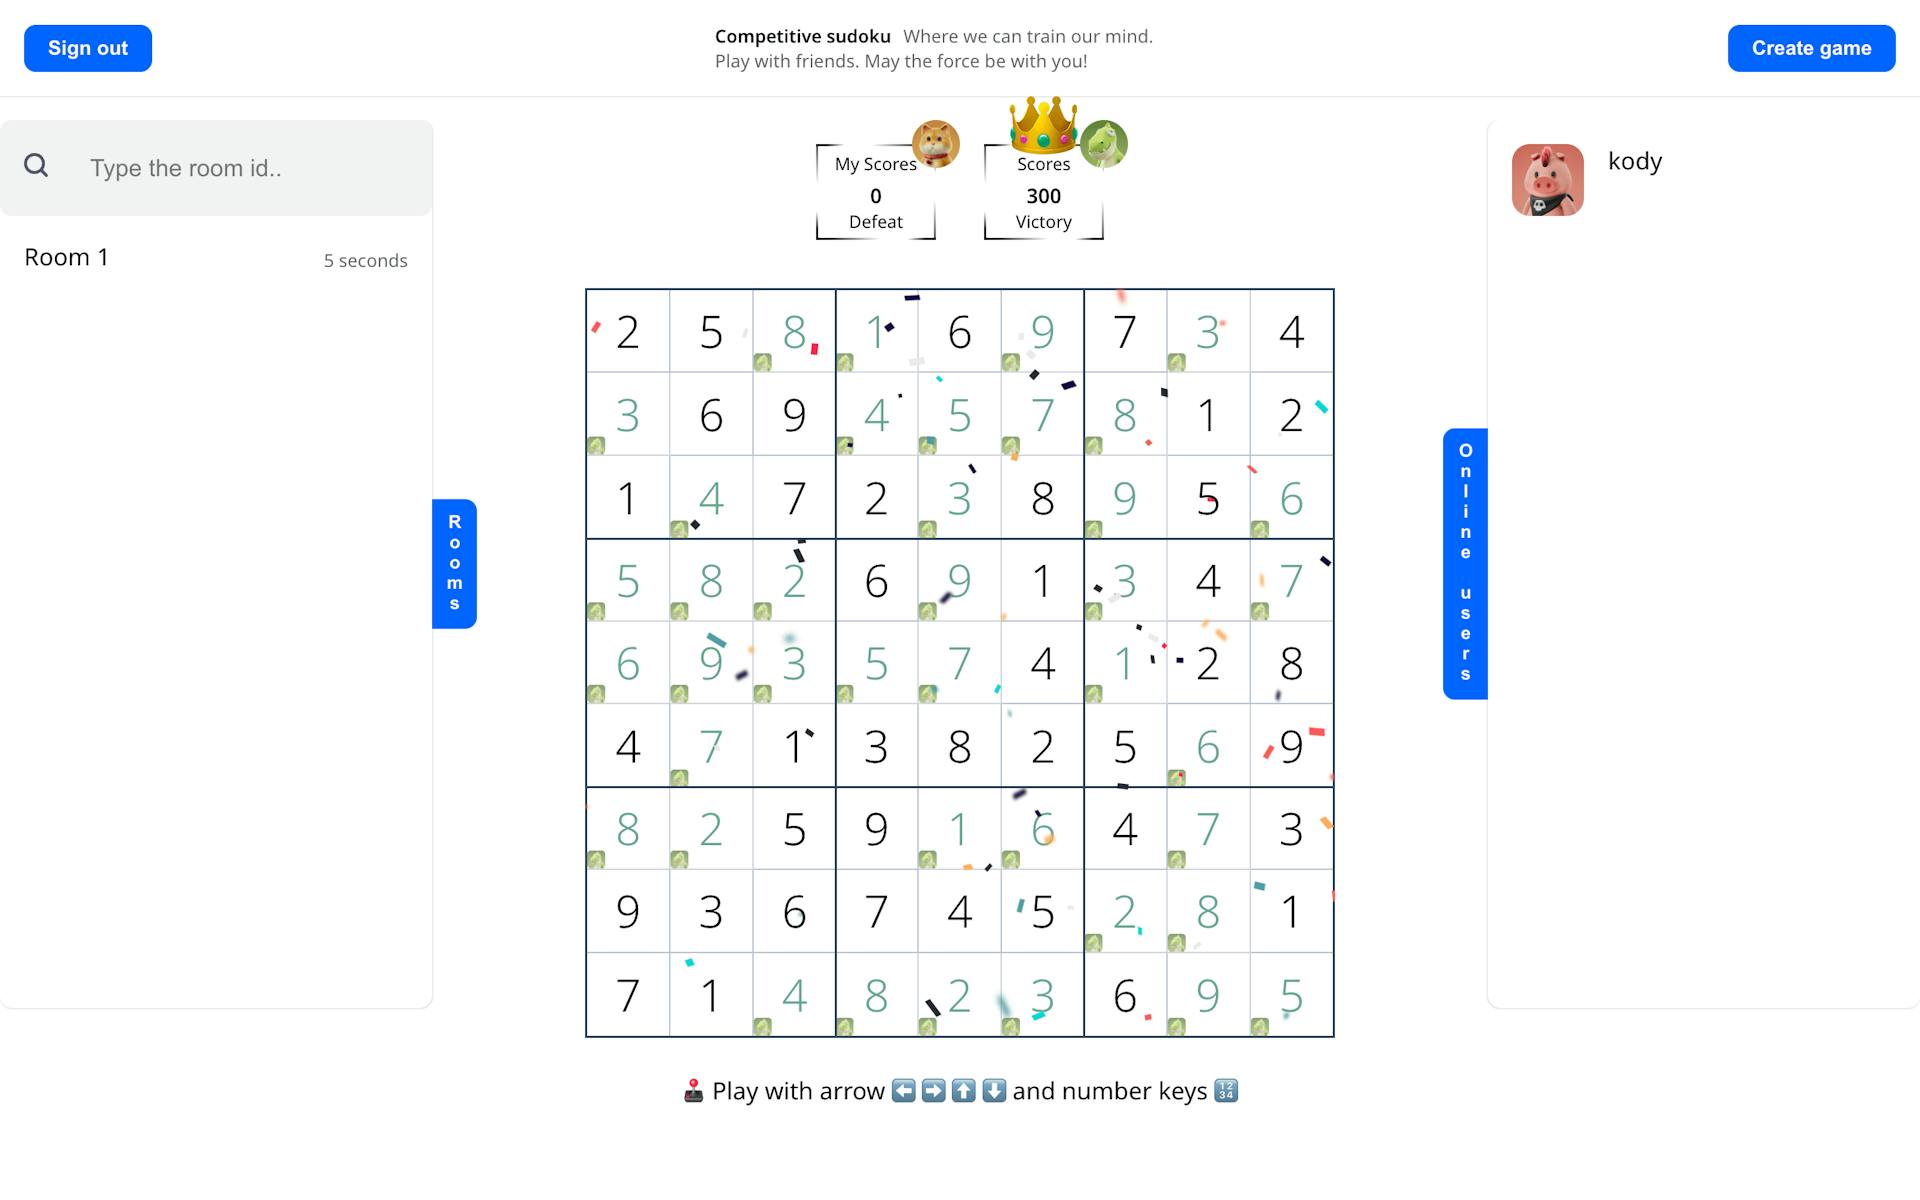 Competitive Sudoku